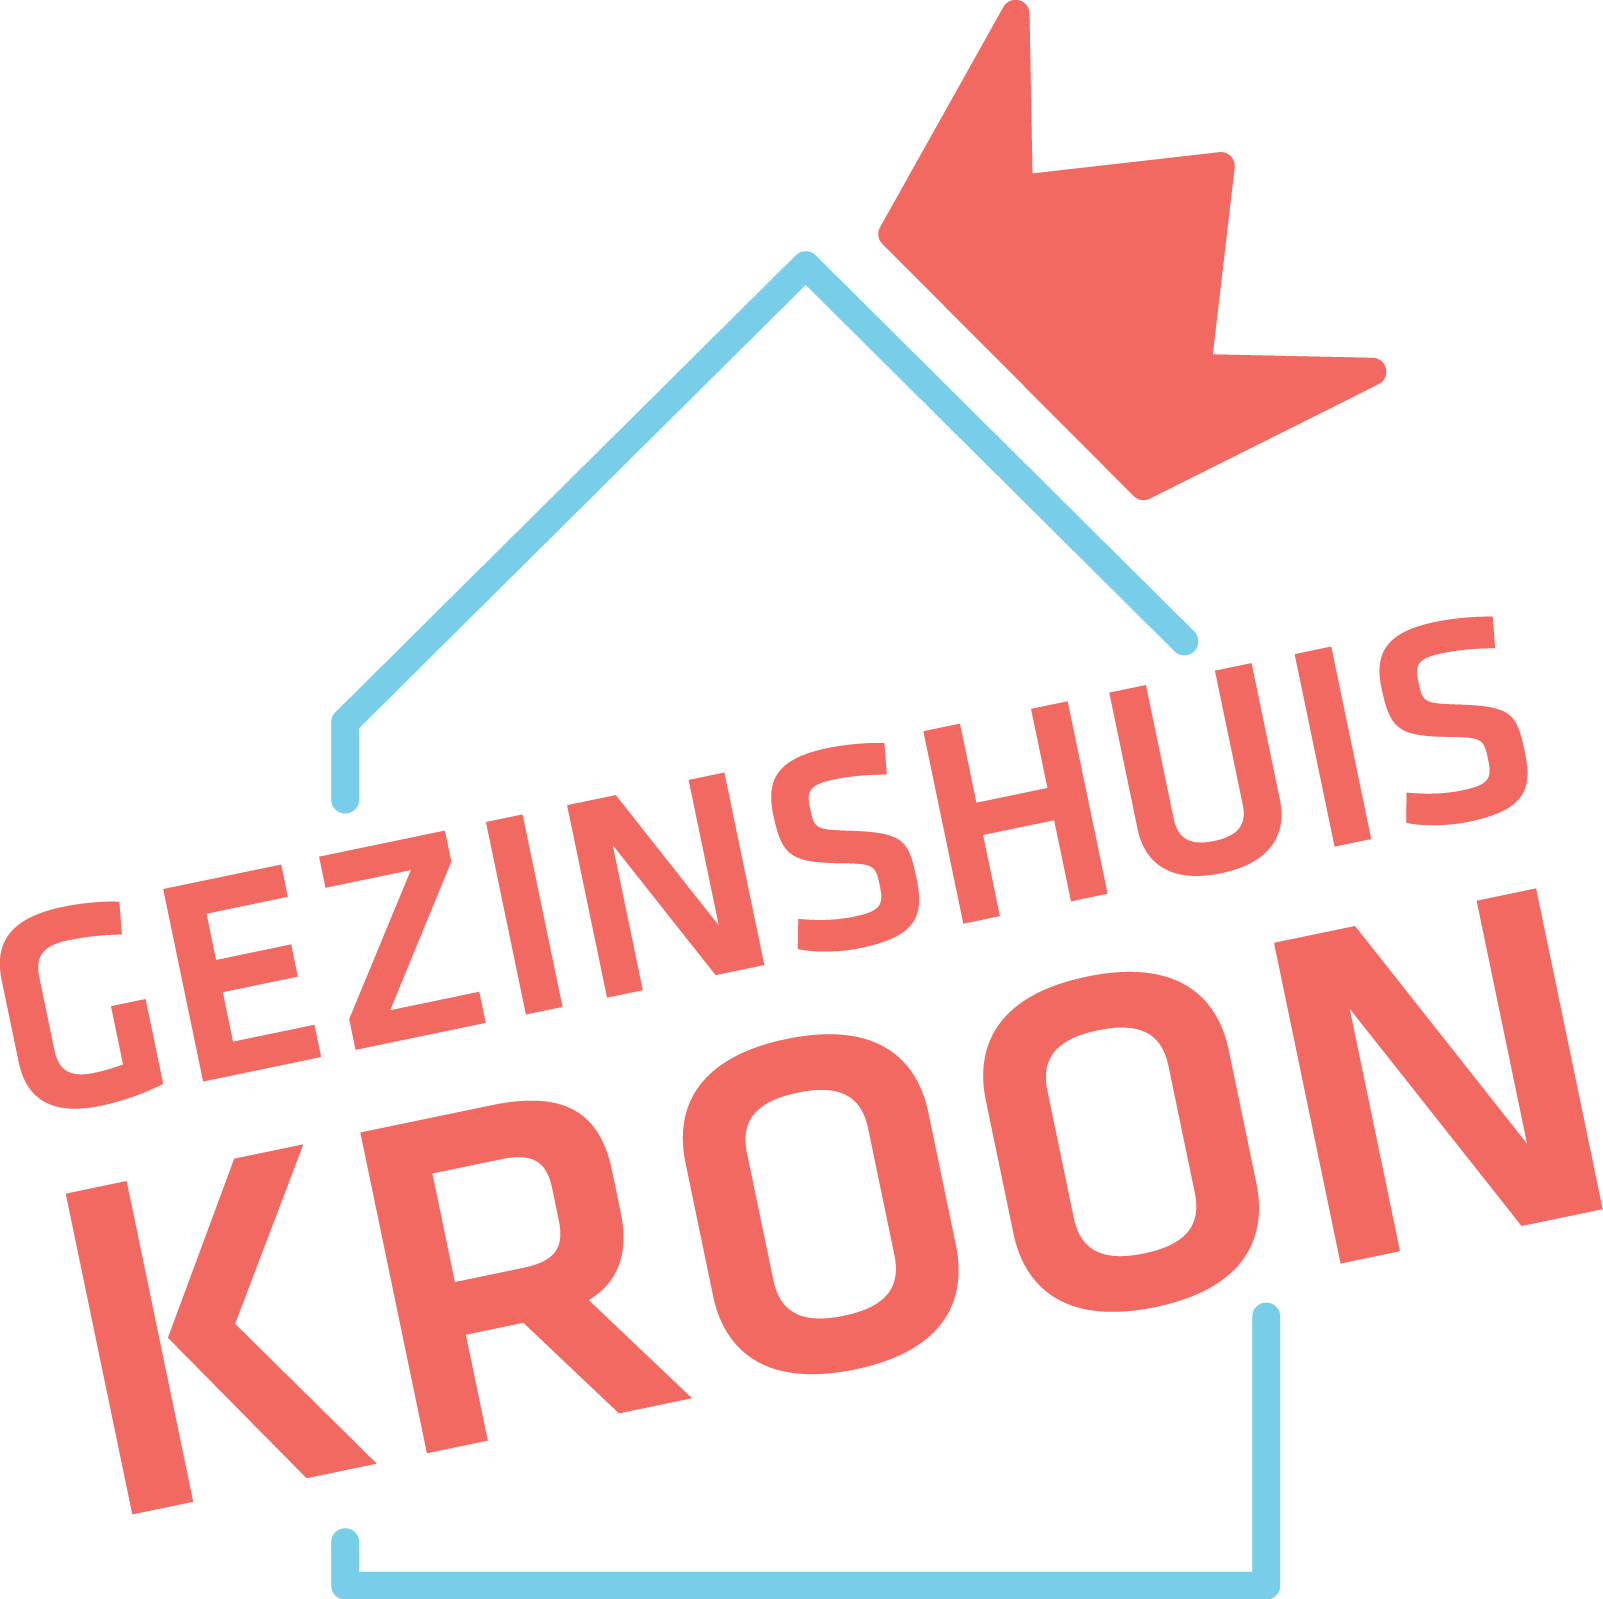 Gezinshuis Kroon